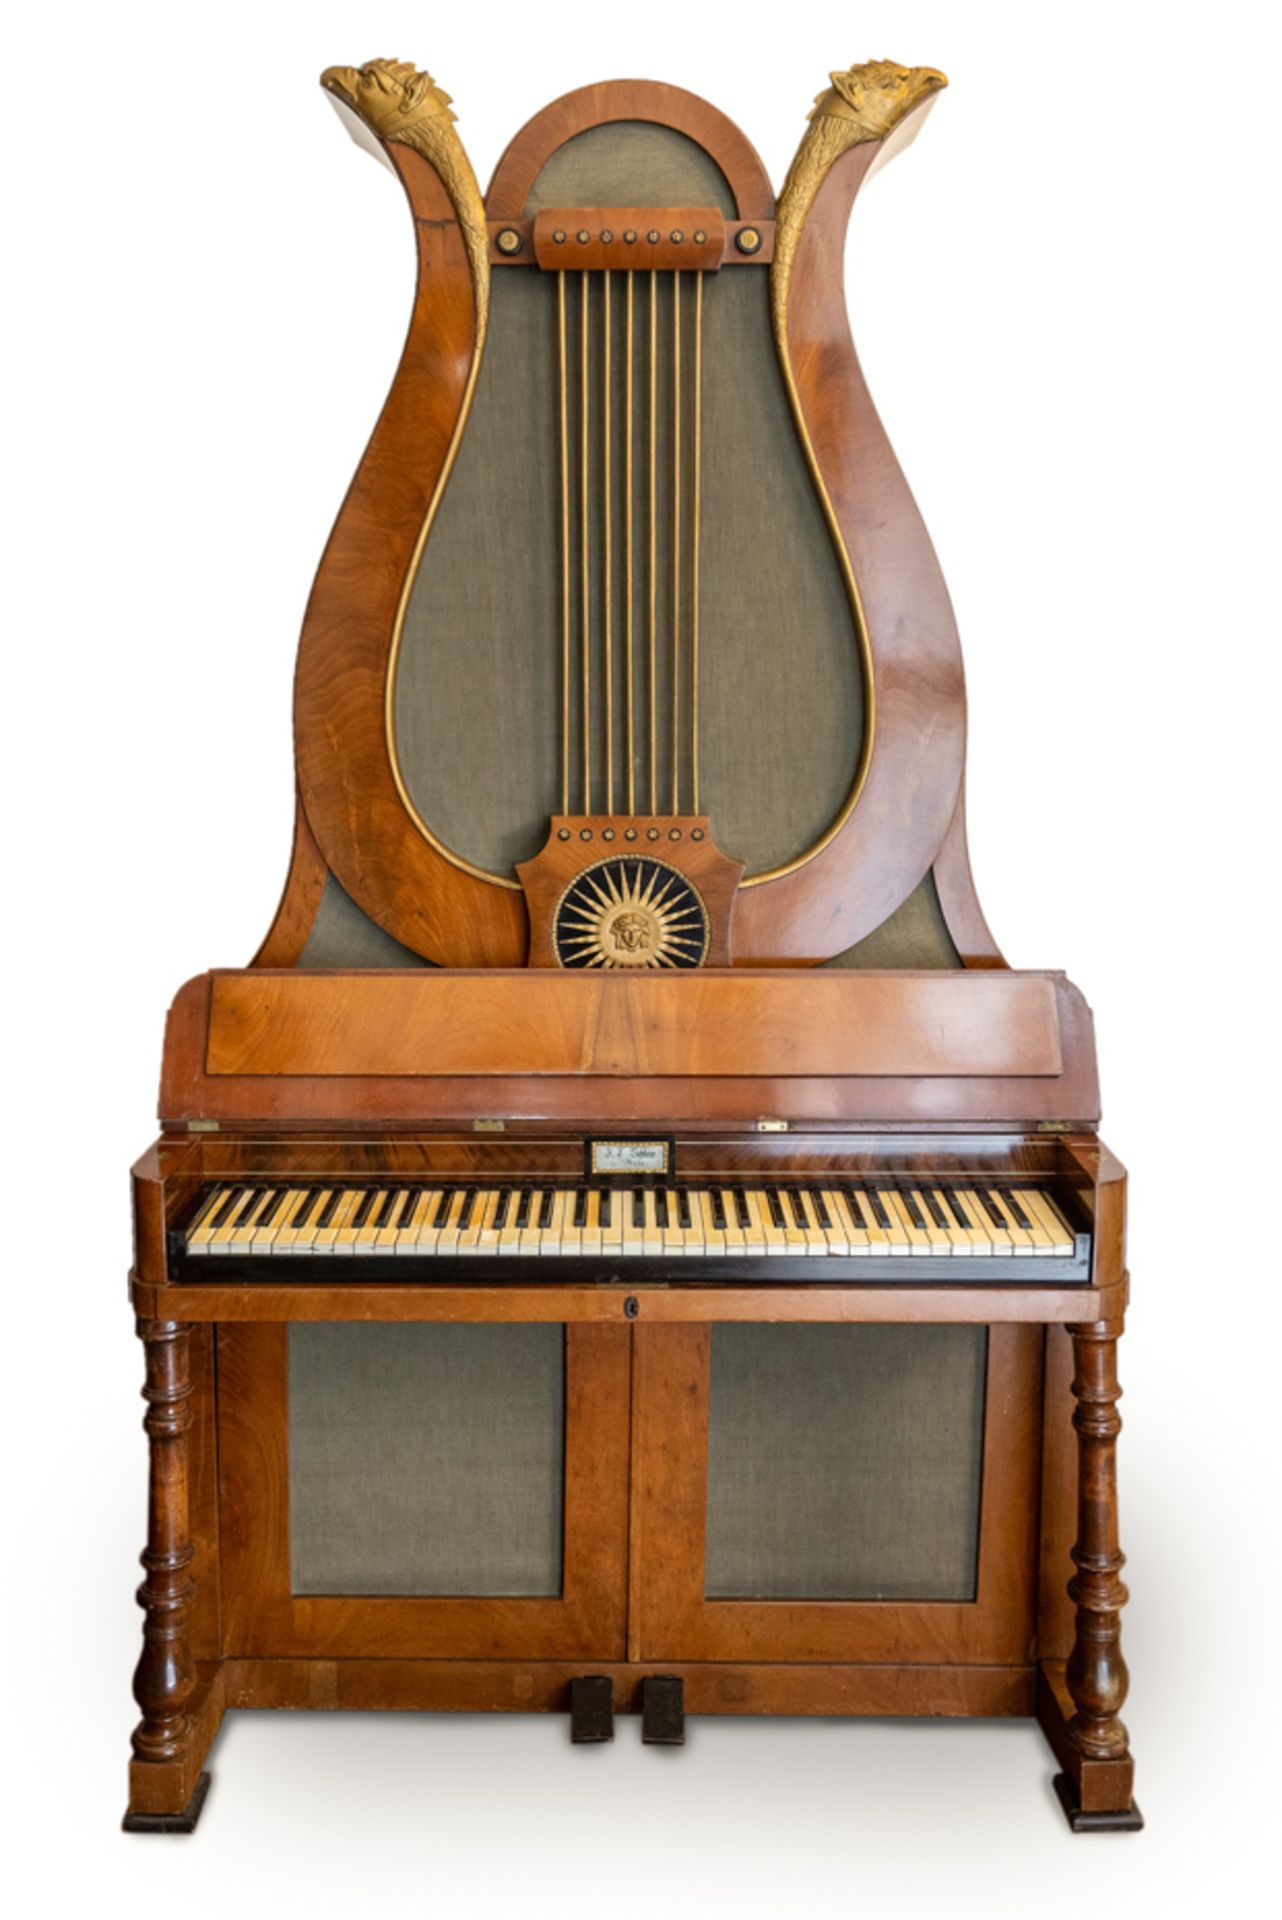 LYRE PIANO BY JOHANN CHRISTIAN SCHLEIP, BERLIN CIRCA 1840-1845